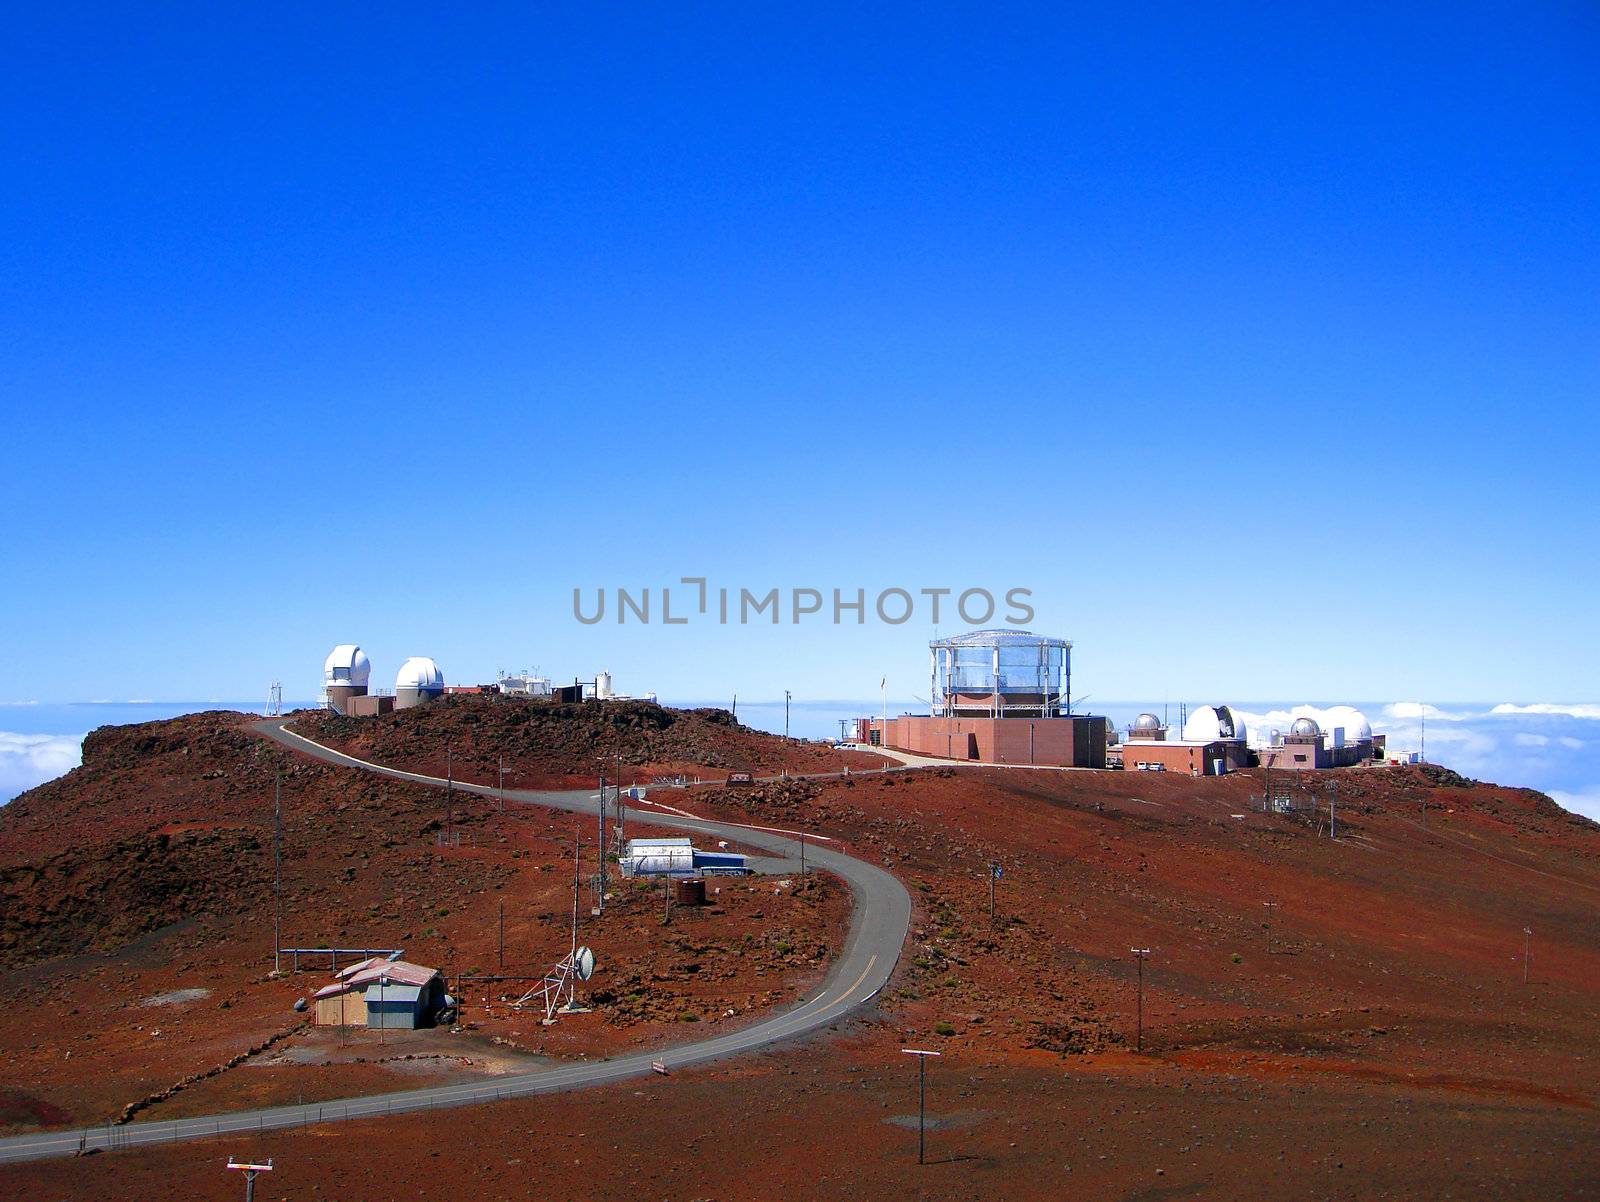 Ground-based Telescopes on the summit of Haleakala, Maui, Hawaii by Cloudia